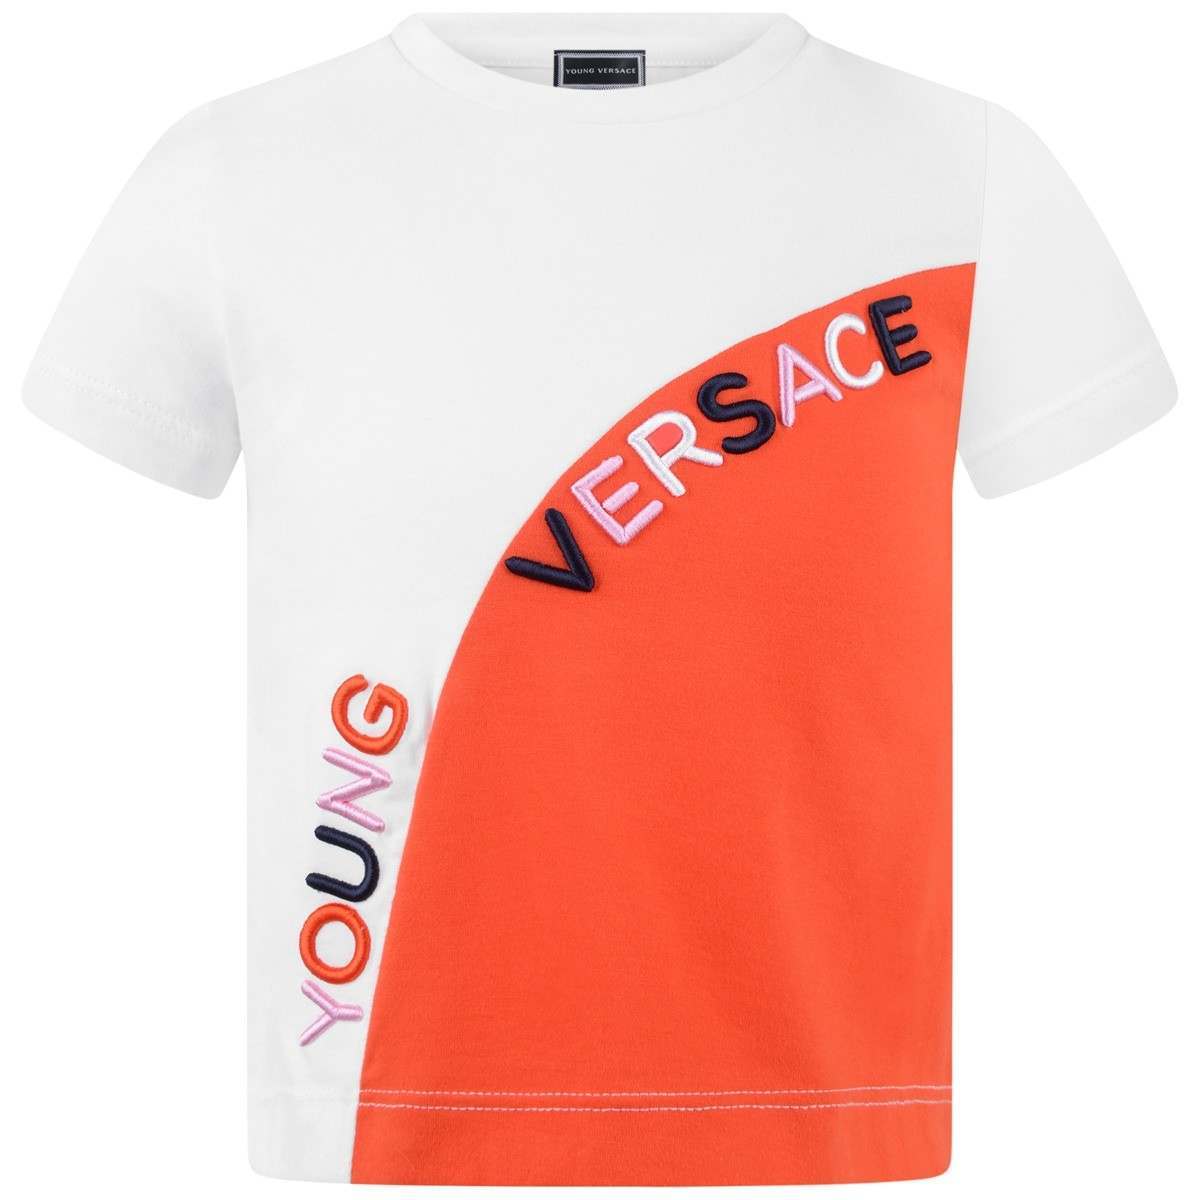 Orange Y Logo - Young Versace Girls White & Orange Logo Top - Young Versace - Designers